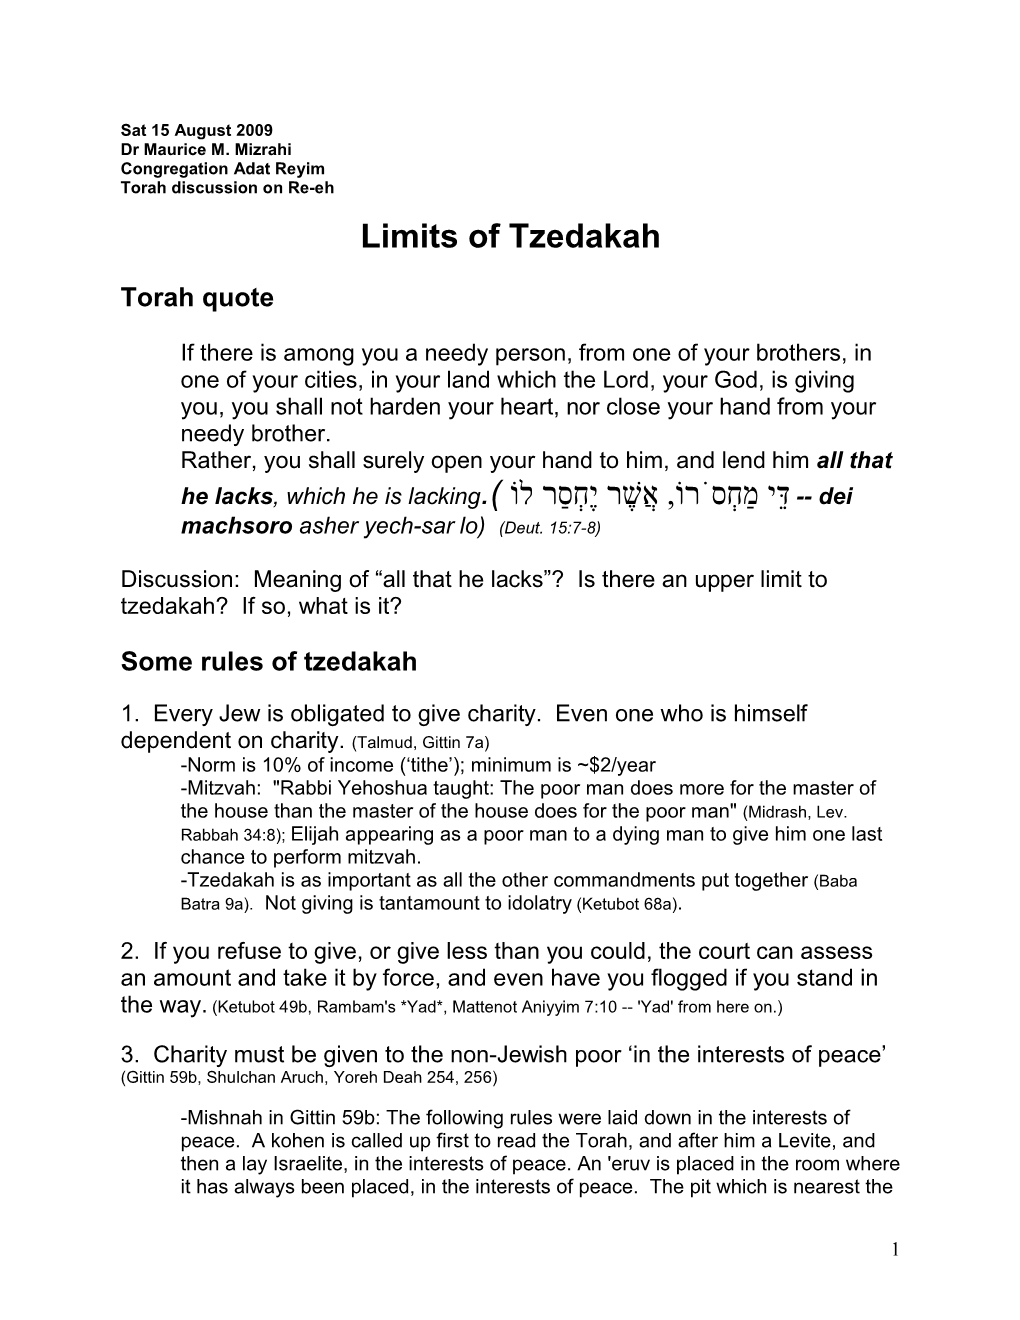 Limits of Tzedakah אֲשֶׁר יֶחְסַר לוֹ , דֵּי מַחְסֹרוֹ